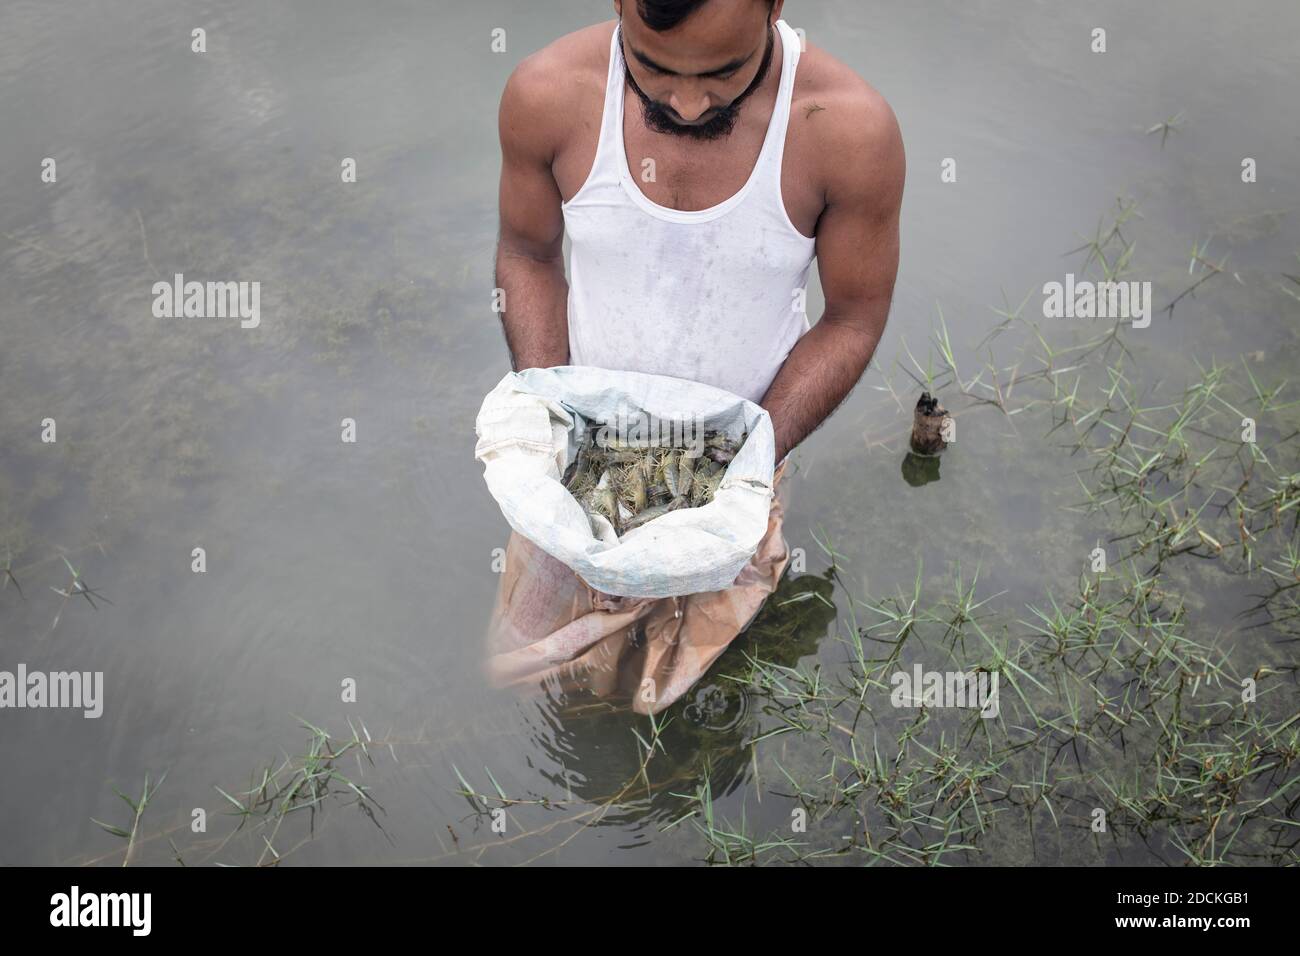 A man looks at harvested shrimps (Penaeus monodon) on a farm in an open sack, shrimps are farmed in the Ganges delta, Mongla, Sundarbans, Bangladesh Stock Photo